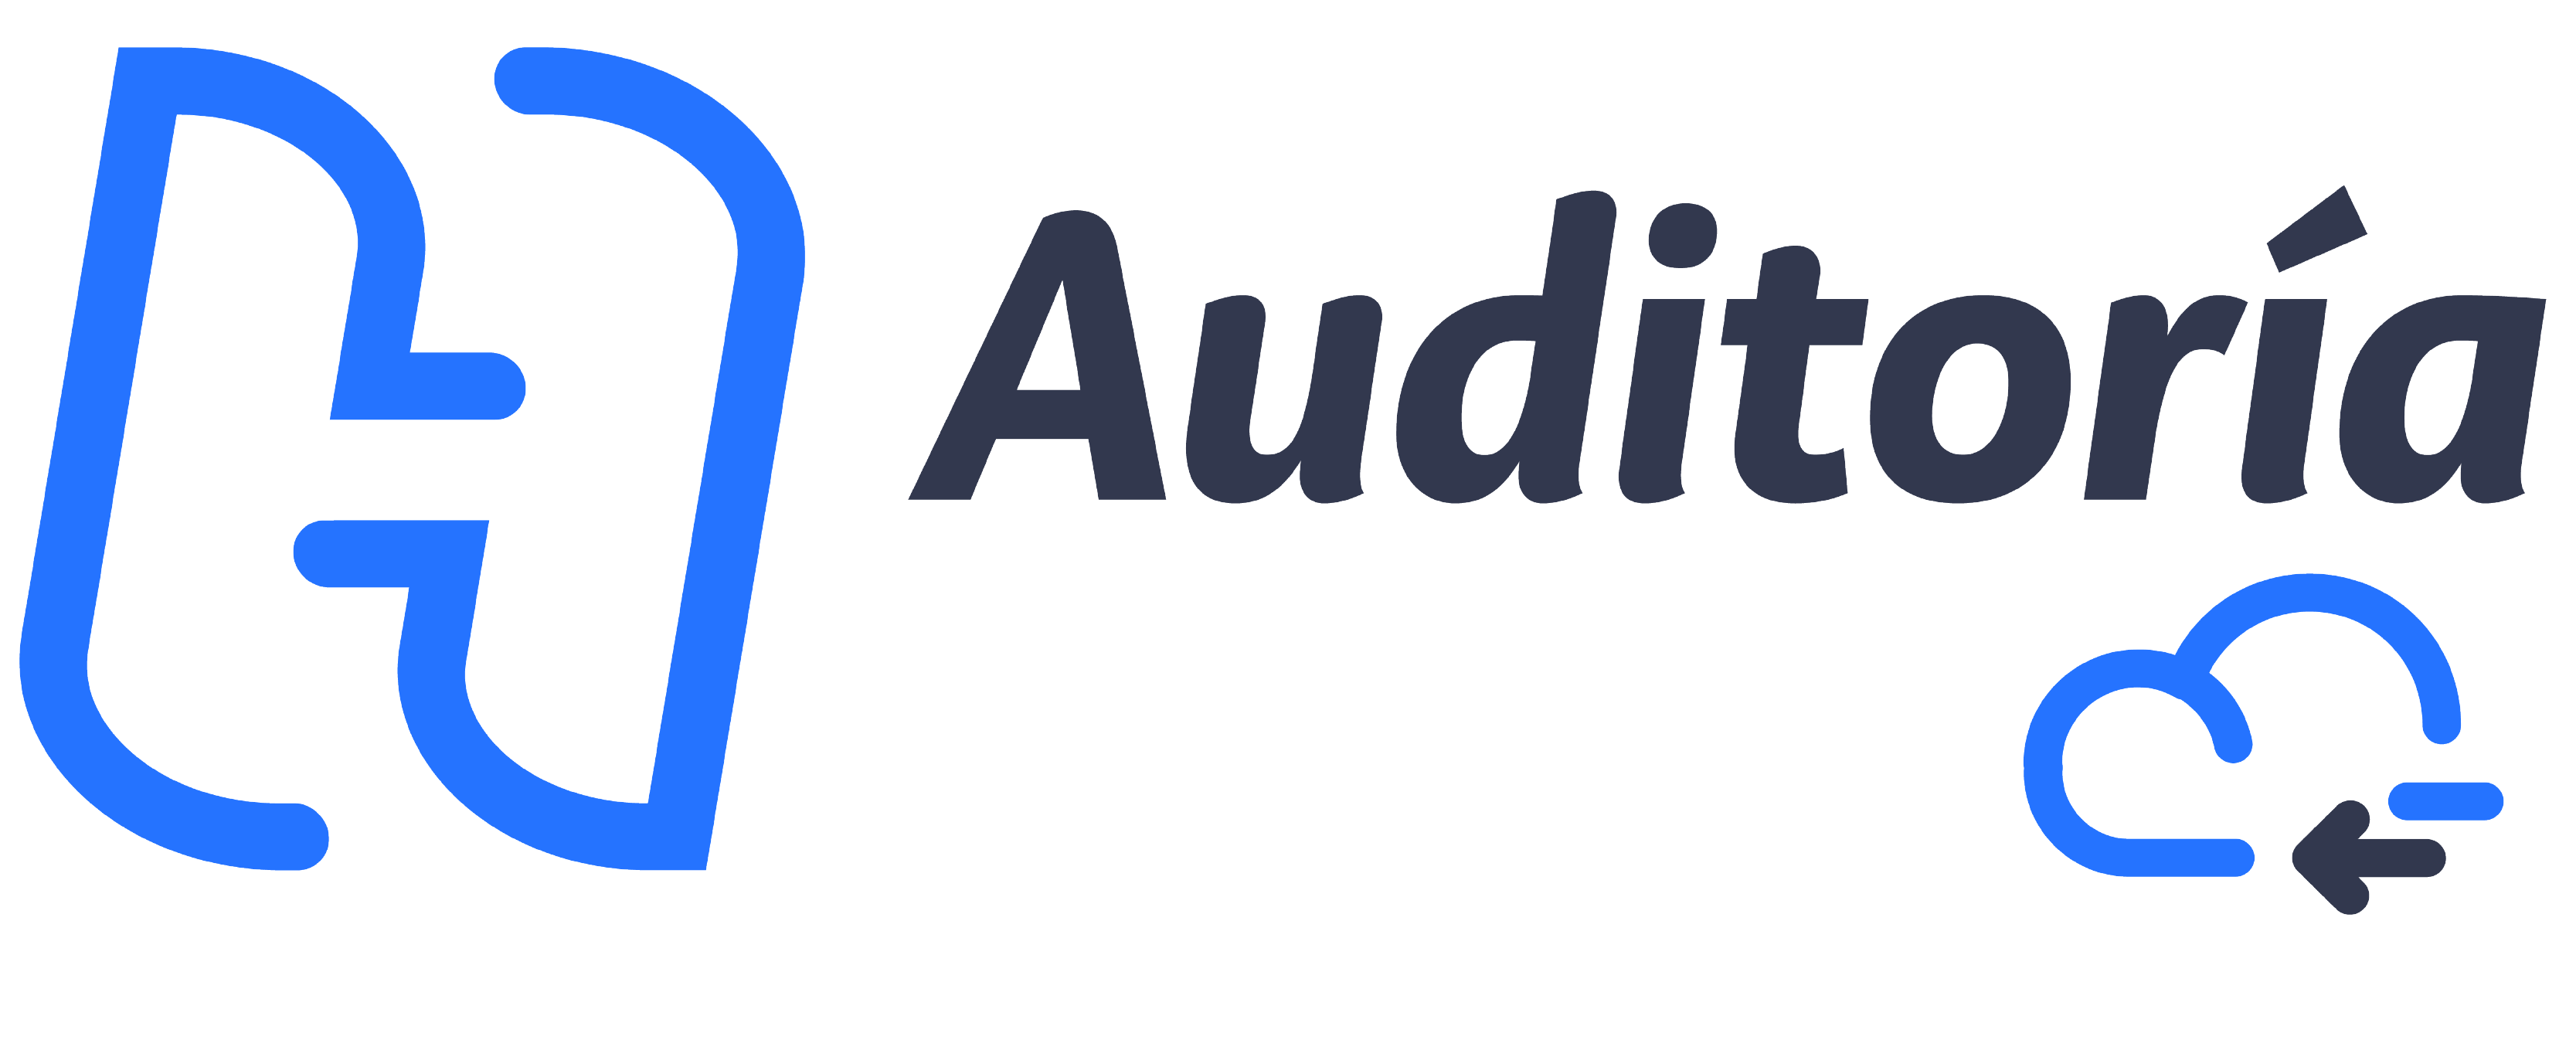 Software para auditores